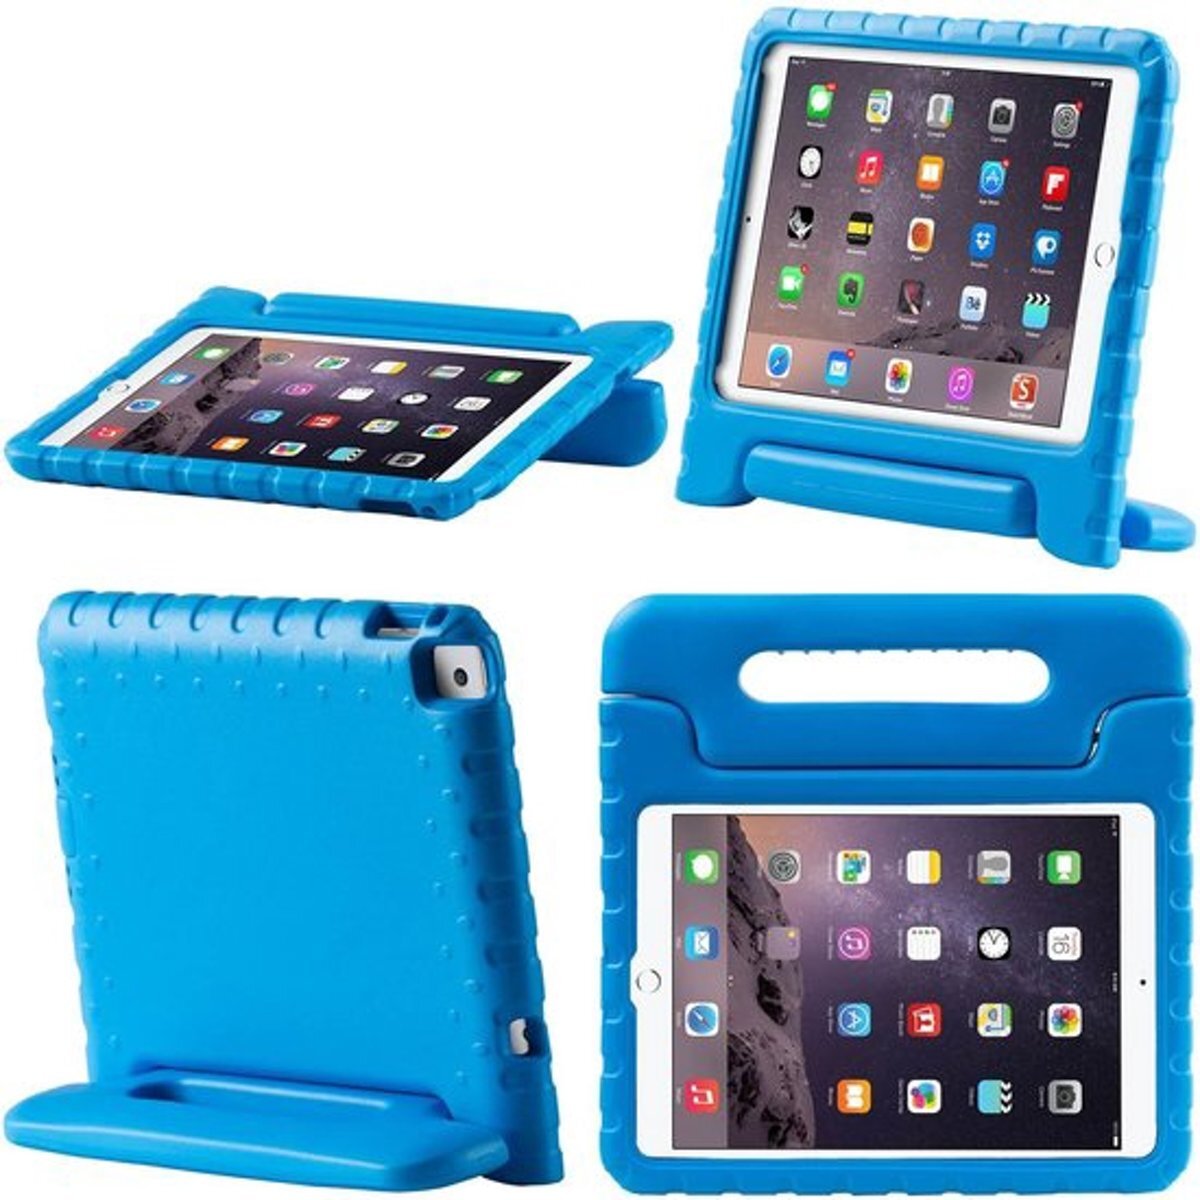 SMH Royal - iPad Air 2 hoes voor kinderen Foam for Kids Shockproof Case Hoesje / Cover / Hoes / Bumper / Tablethoes/ Proof Zeer sterk Met Handige Handvat Blauw